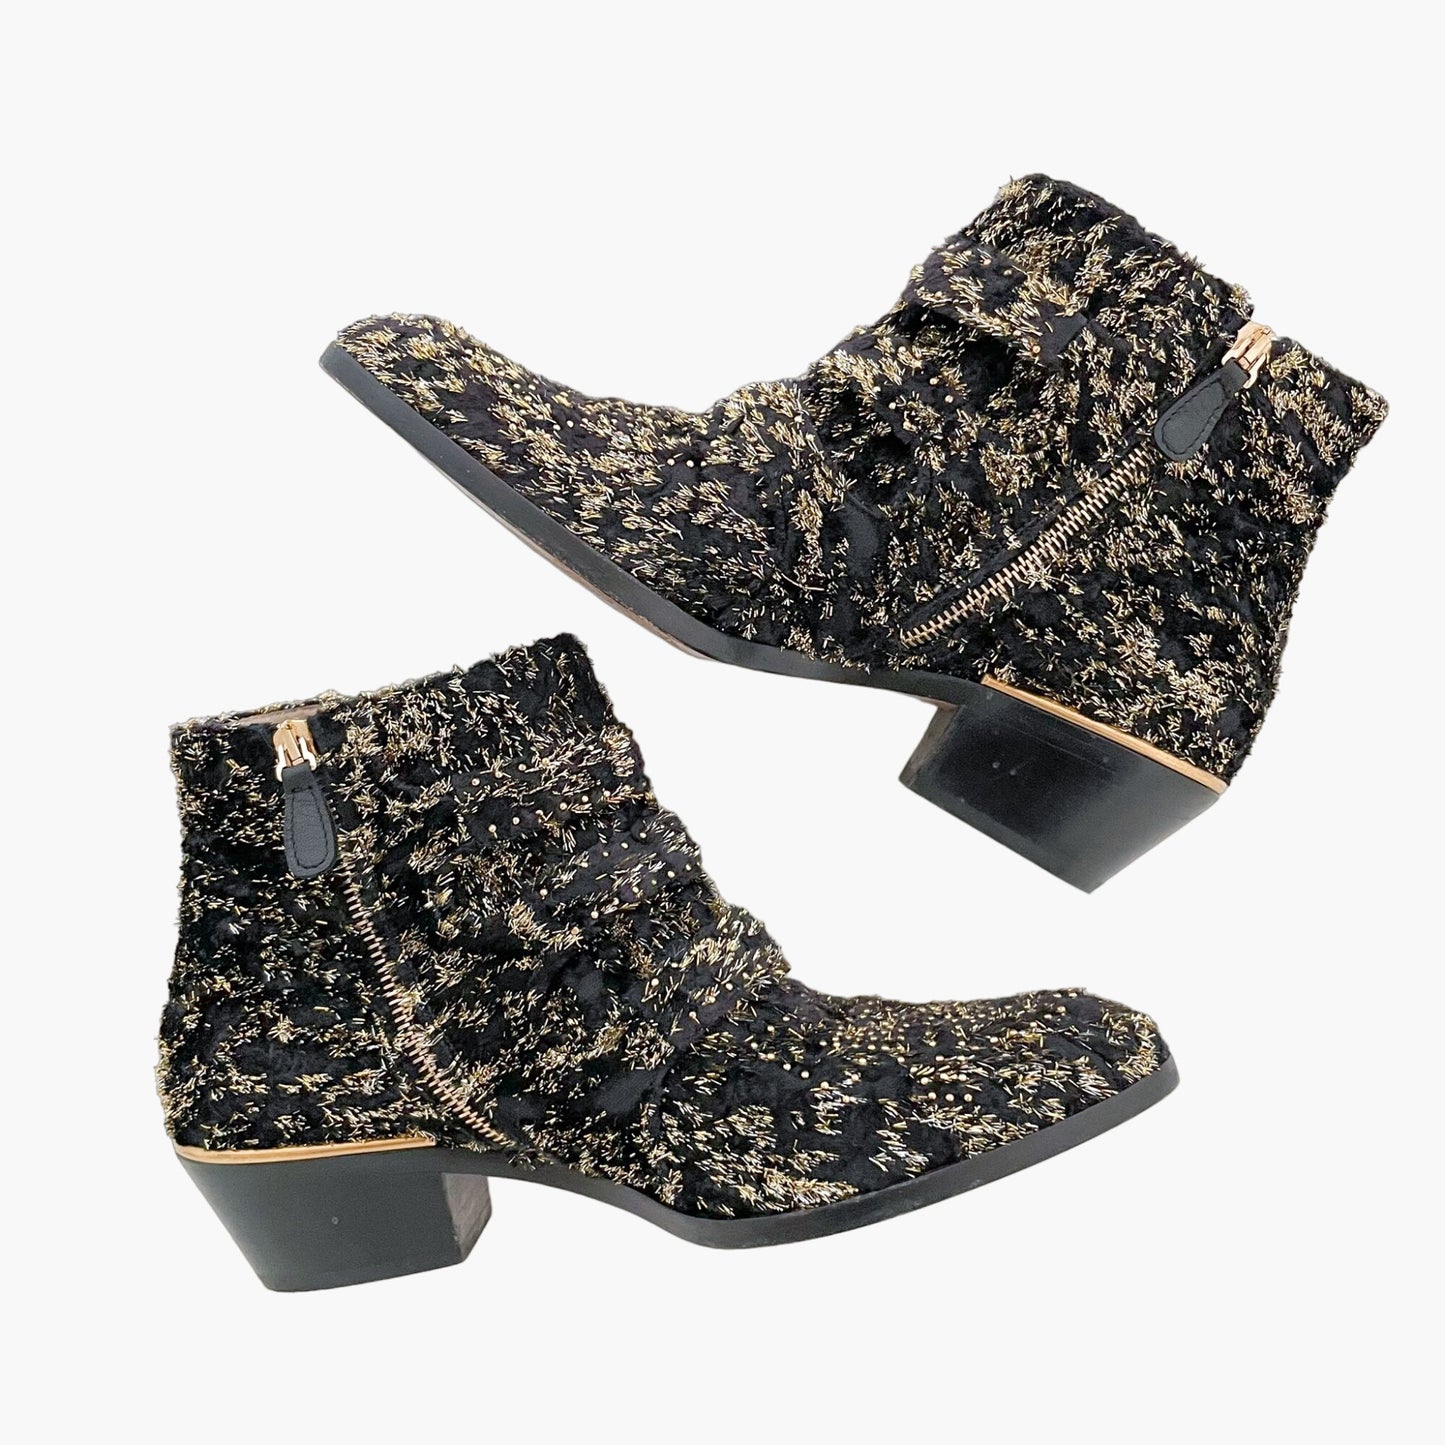 Chloé Susanna Short Boots in Black and Metallic Silver/Gold Velvet Size 37.5